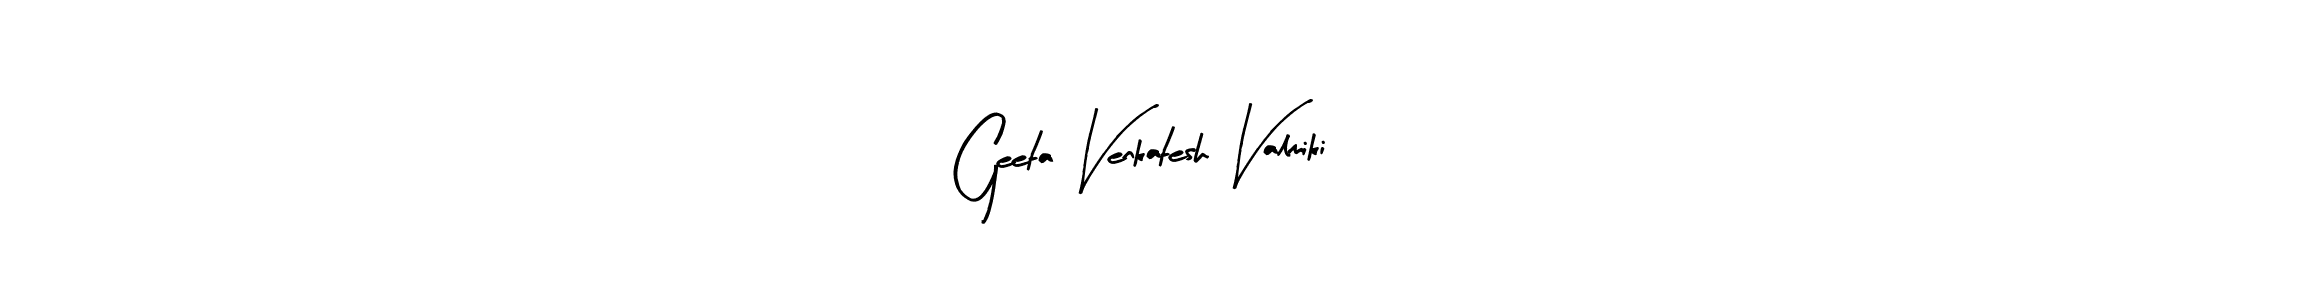 Geeta Venkatesh Valmiki stylish signature style. Best Handwritten Sign (Arty Signature) for my name. Handwritten Signature Collection Ideas for my name Geeta Venkatesh Valmiki. Geeta Venkatesh Valmiki signature style 8 images and pictures png